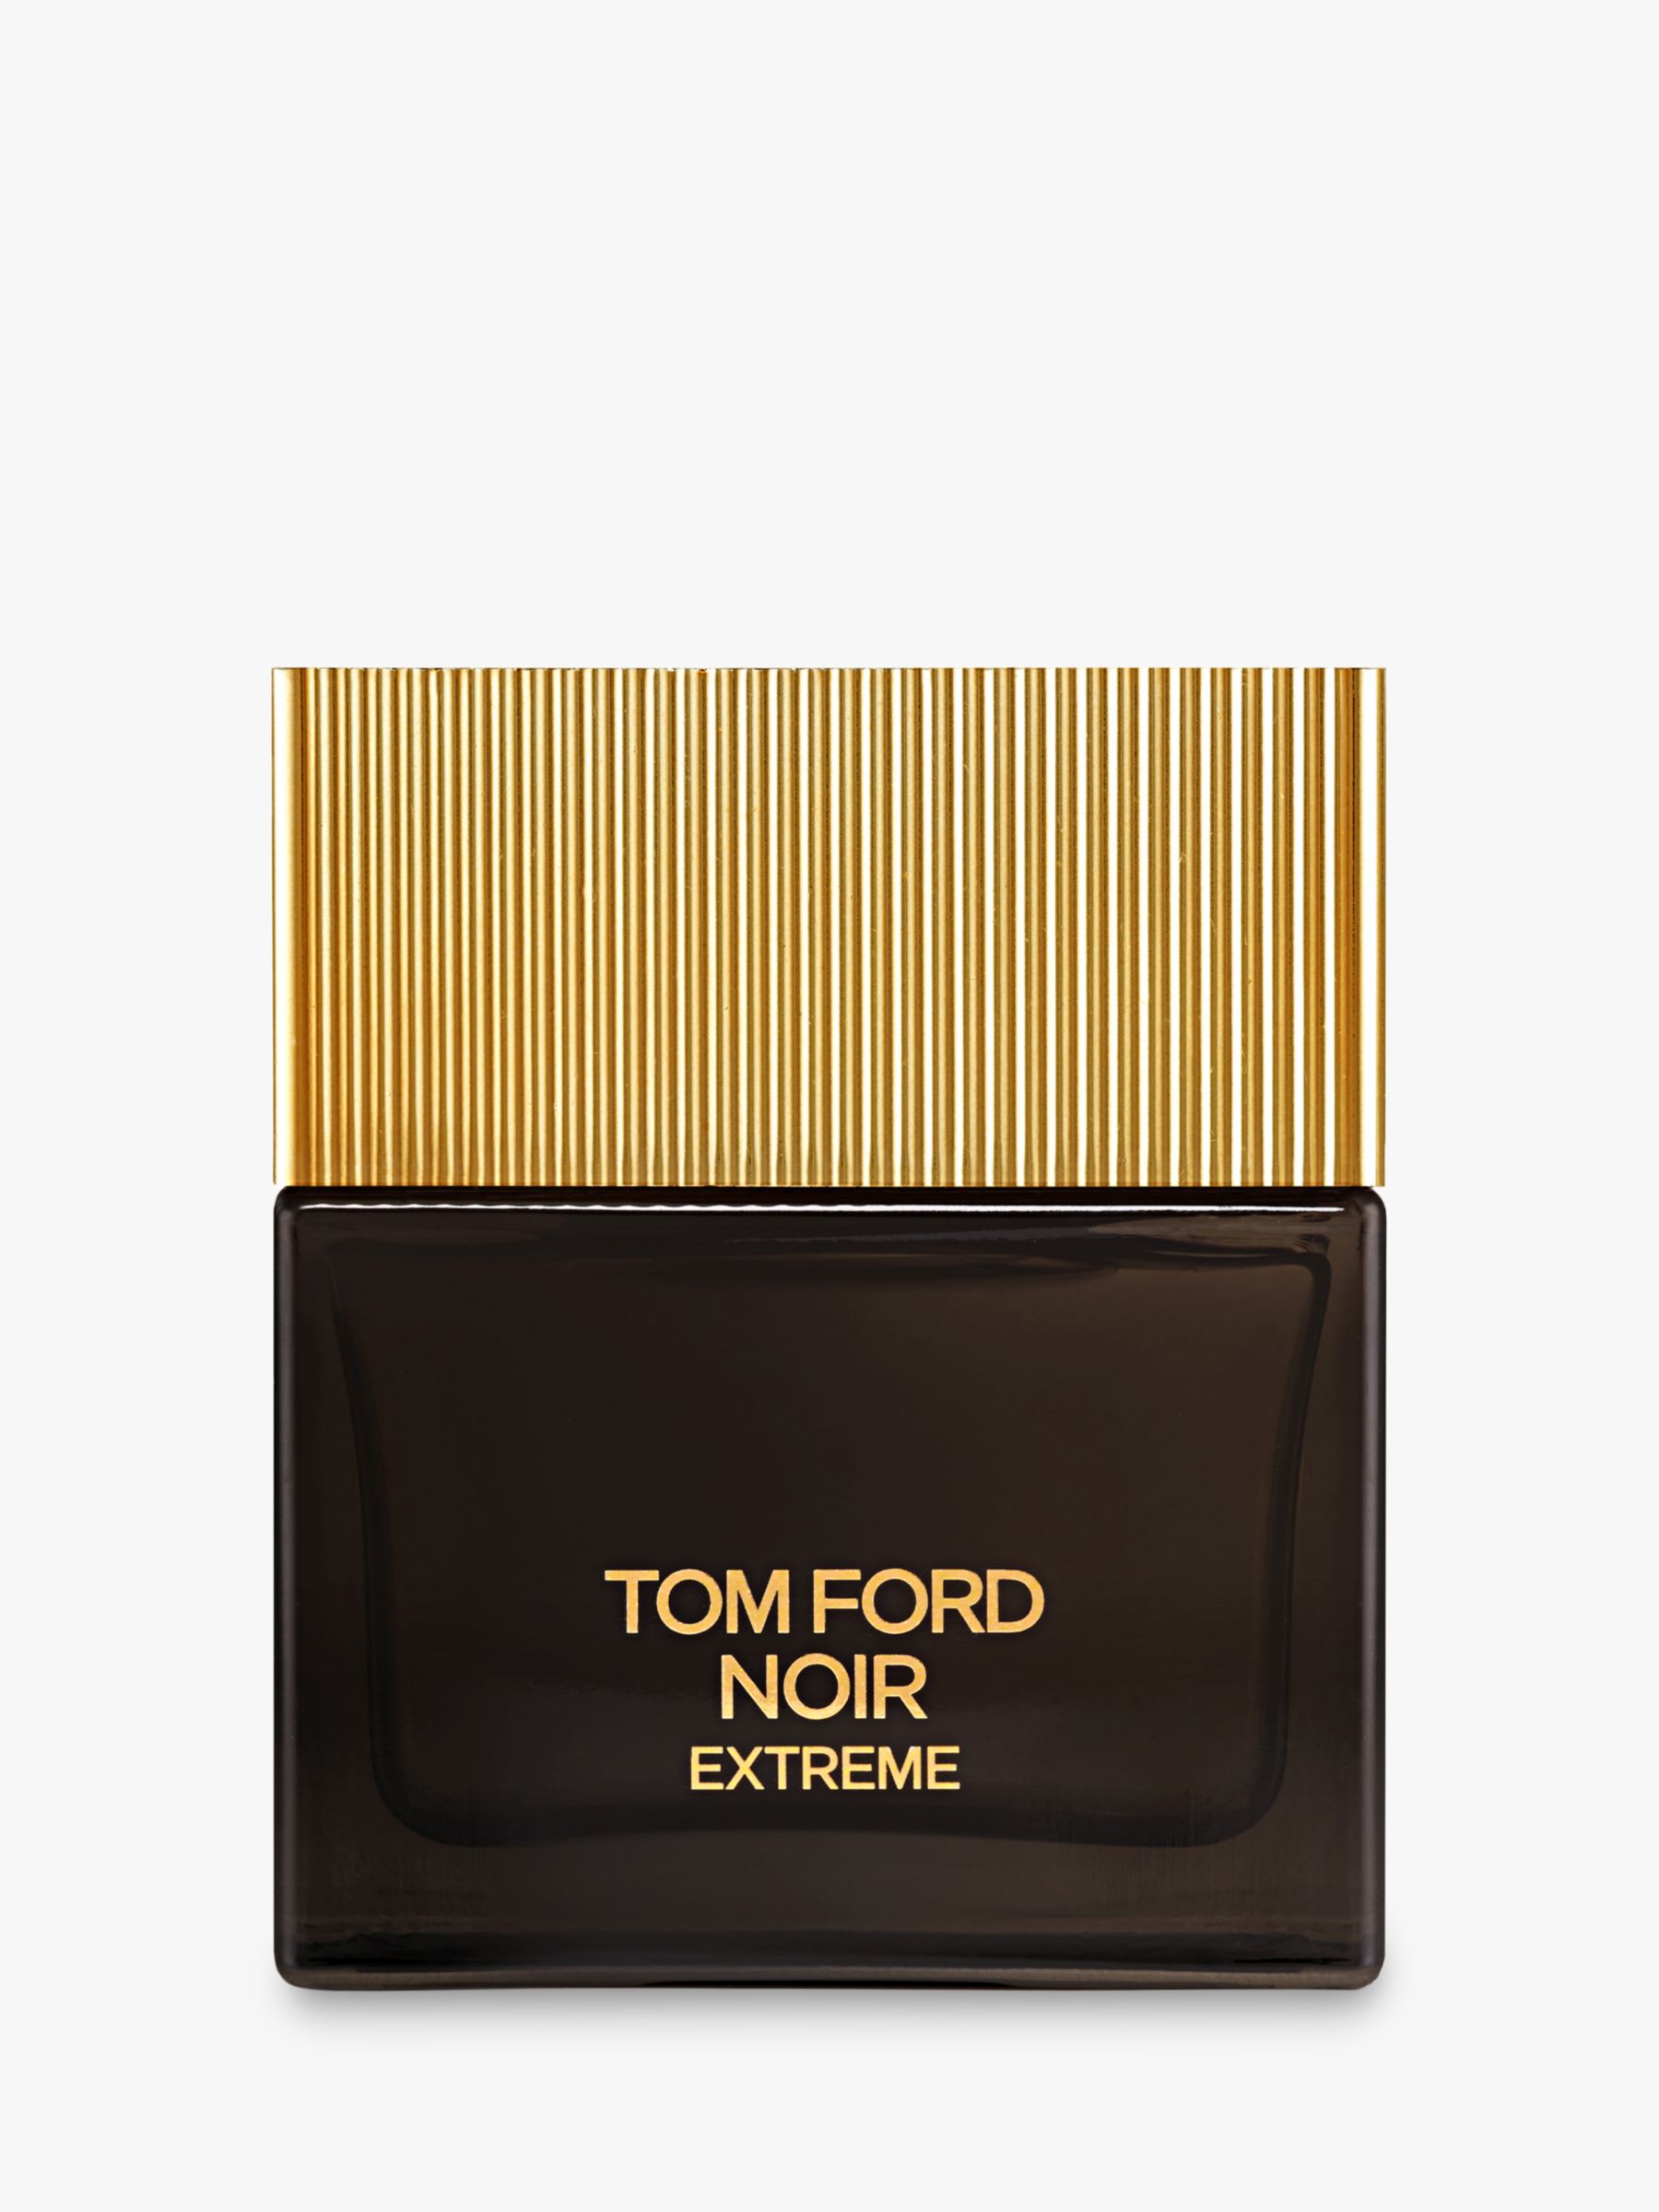 TOM FORD Noir Extreme, 50ml 1